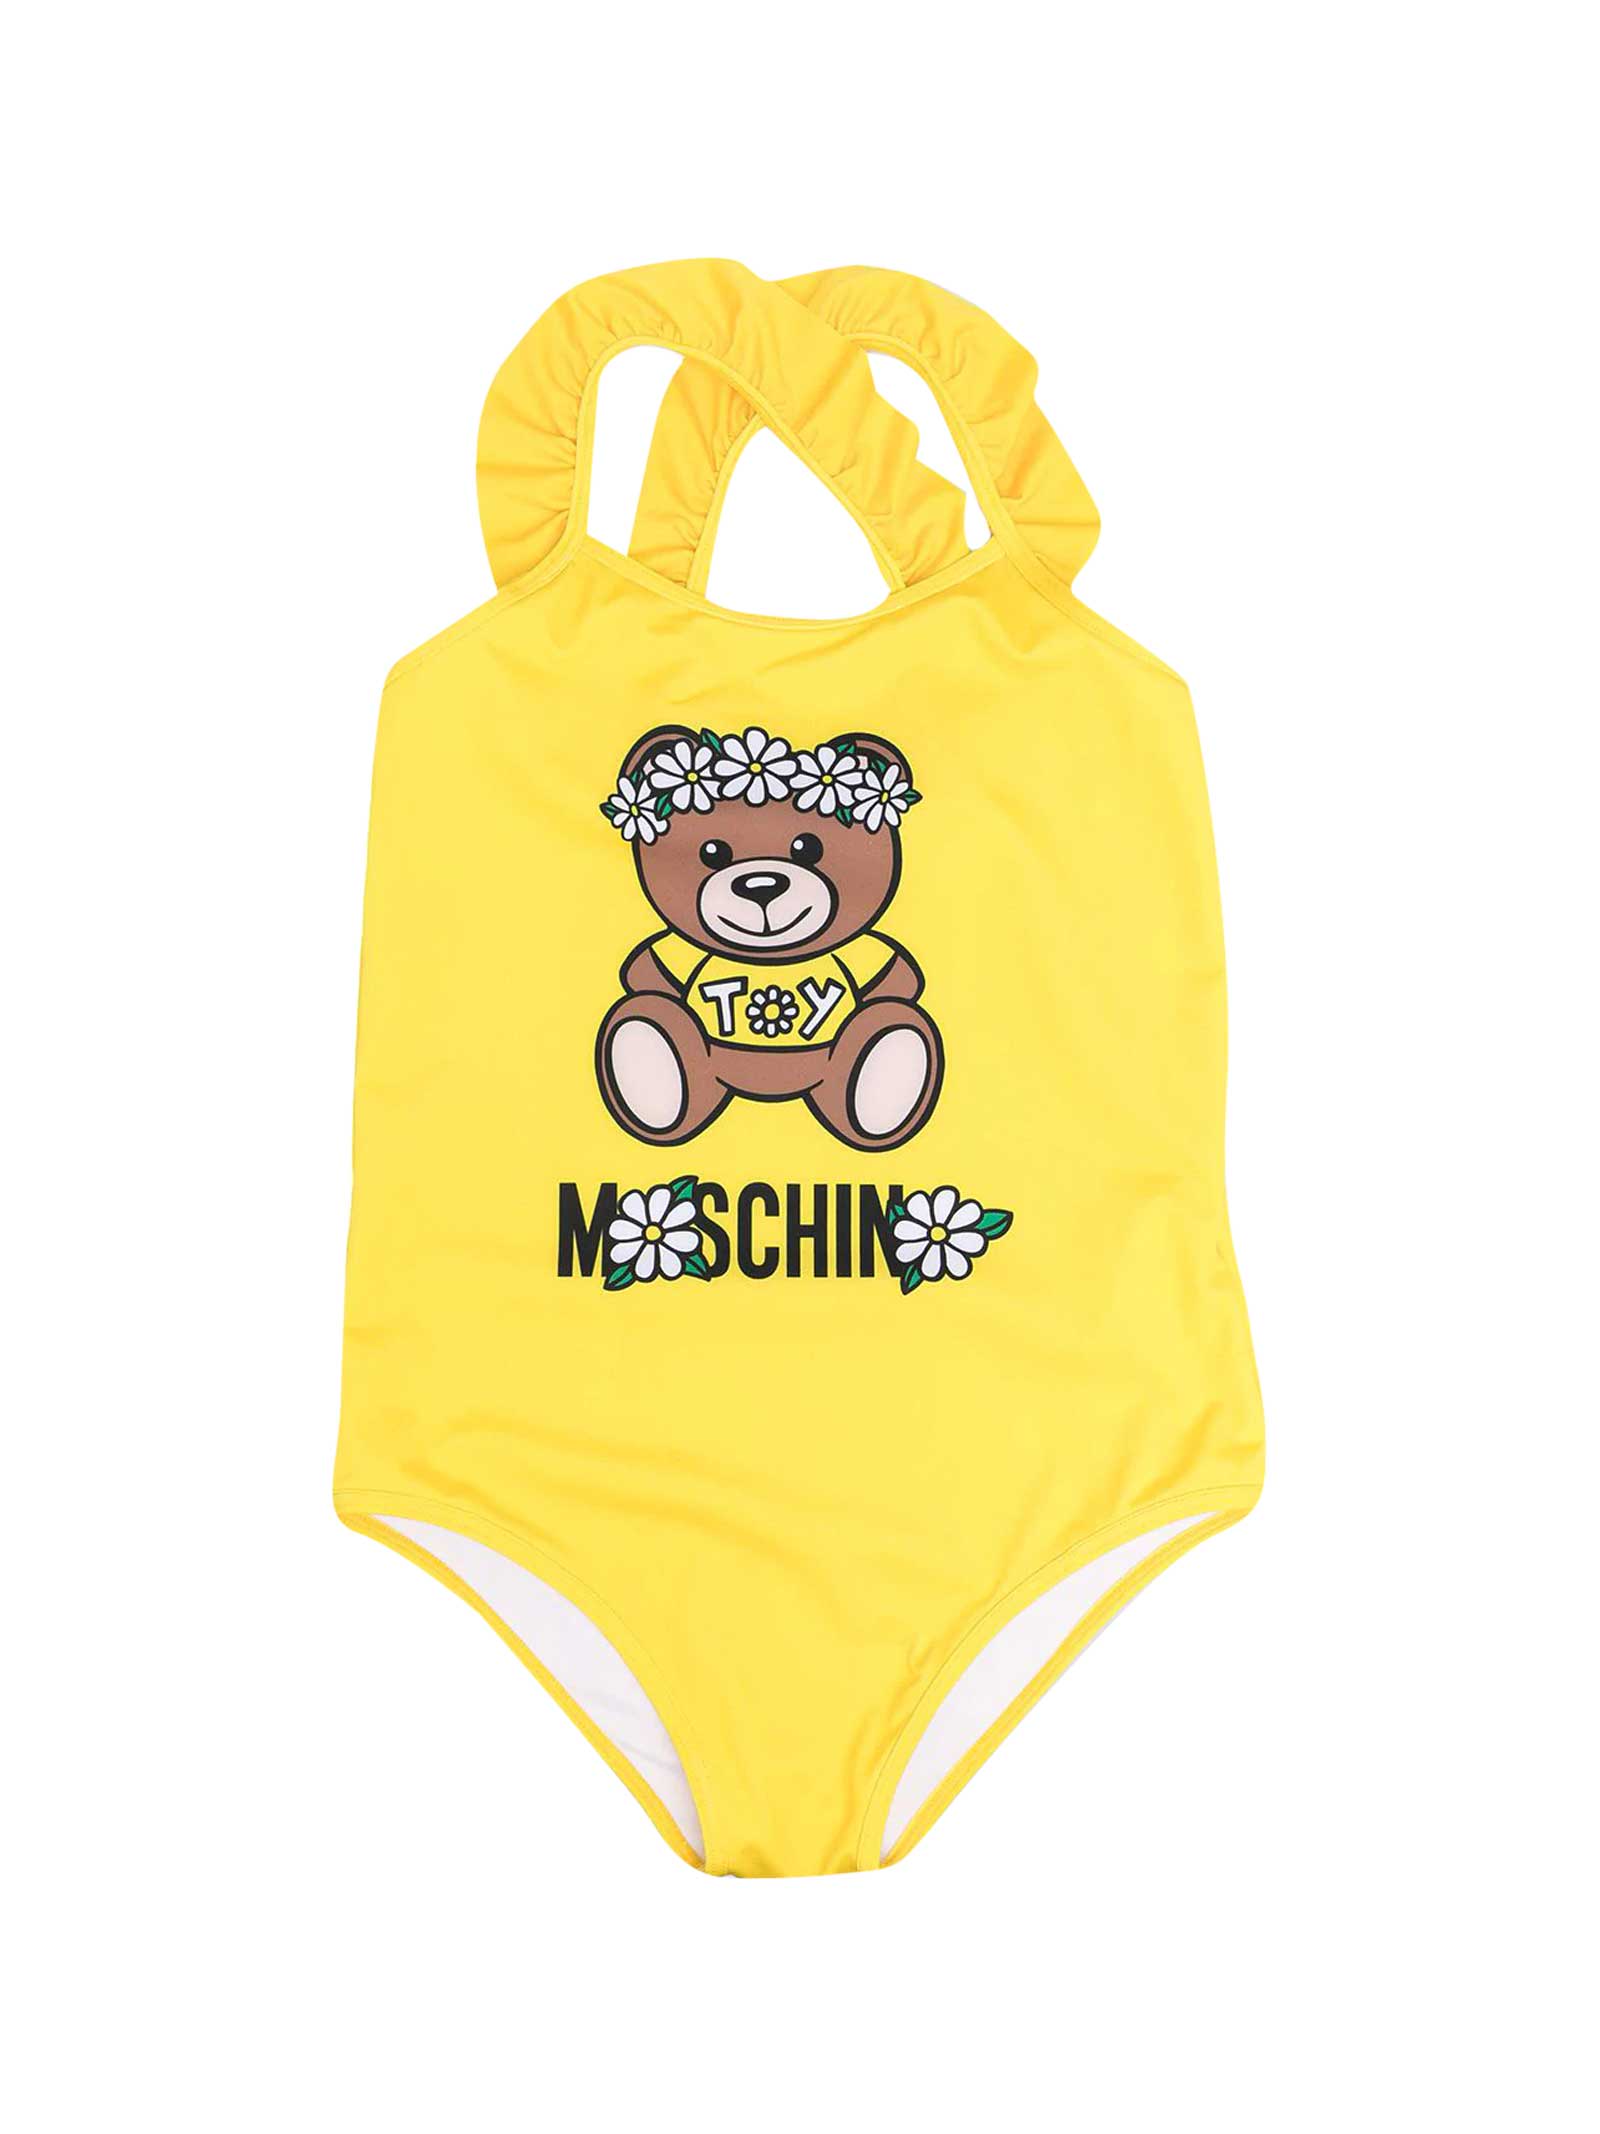 Moschino Yellow One-piece Swimsuit